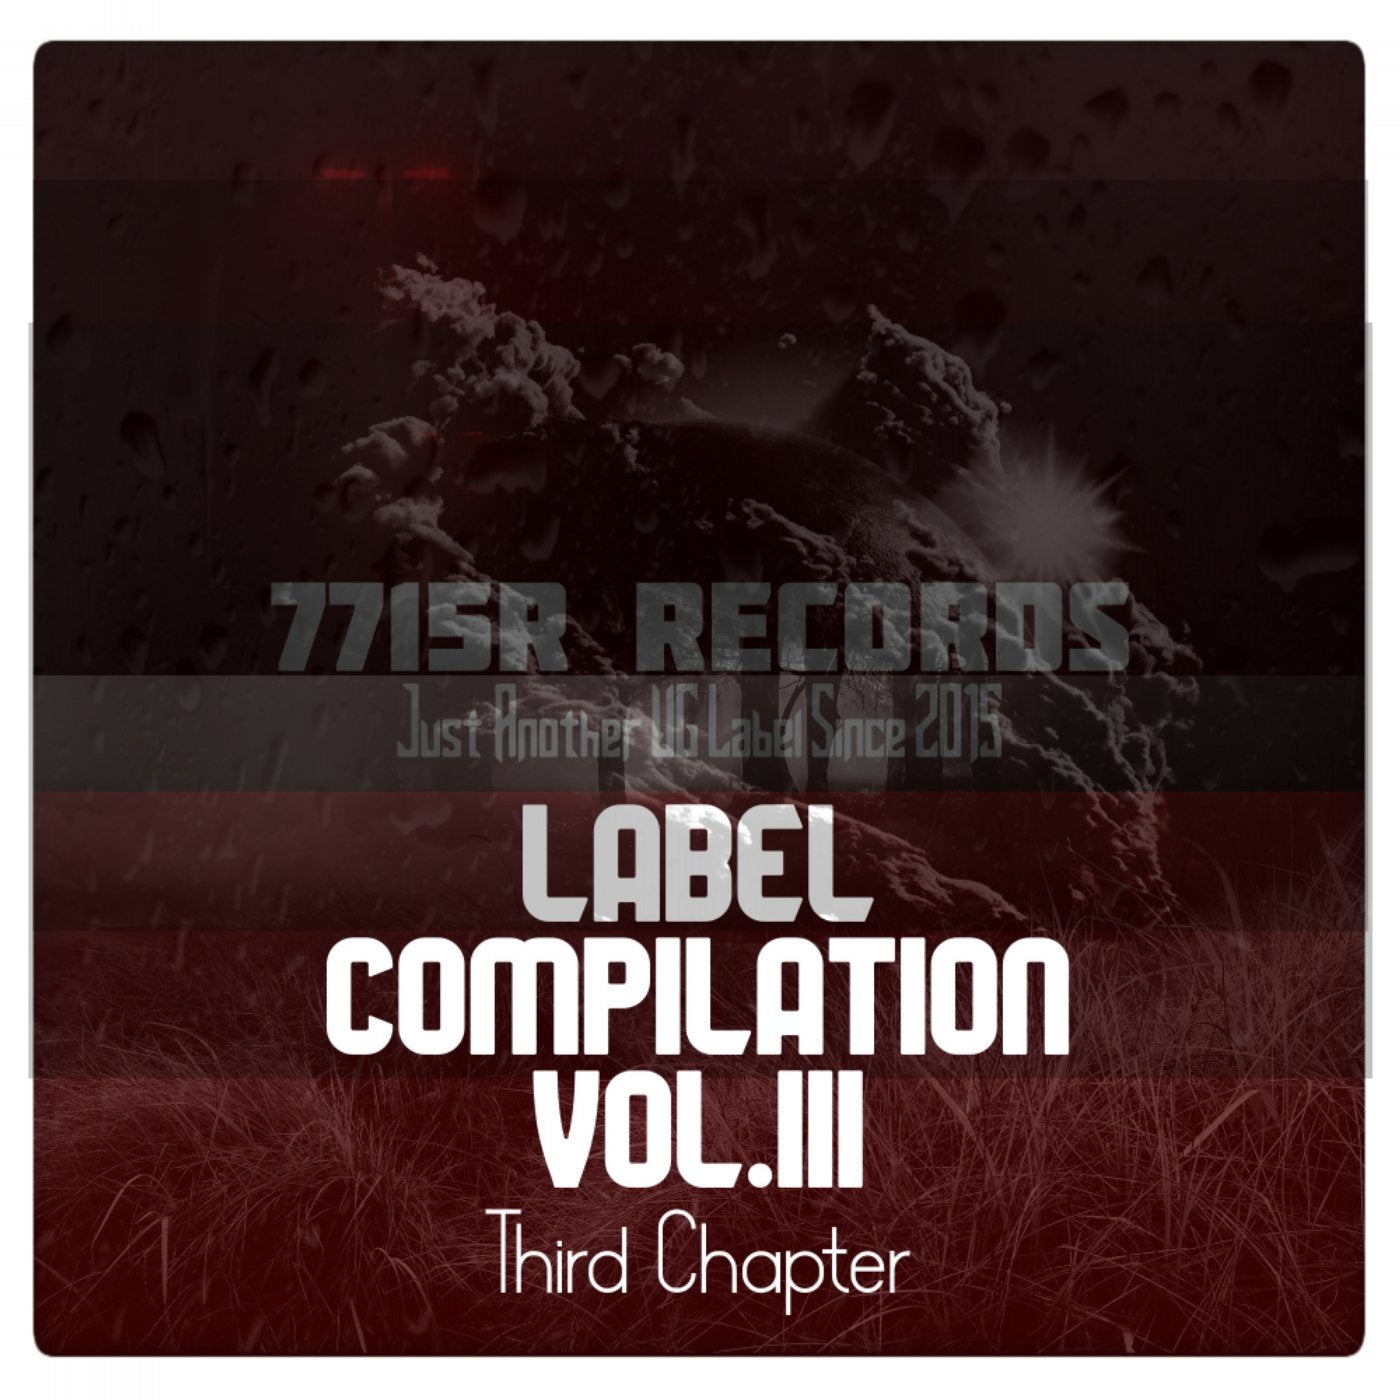 7715R Records Label Compilation Vol.III